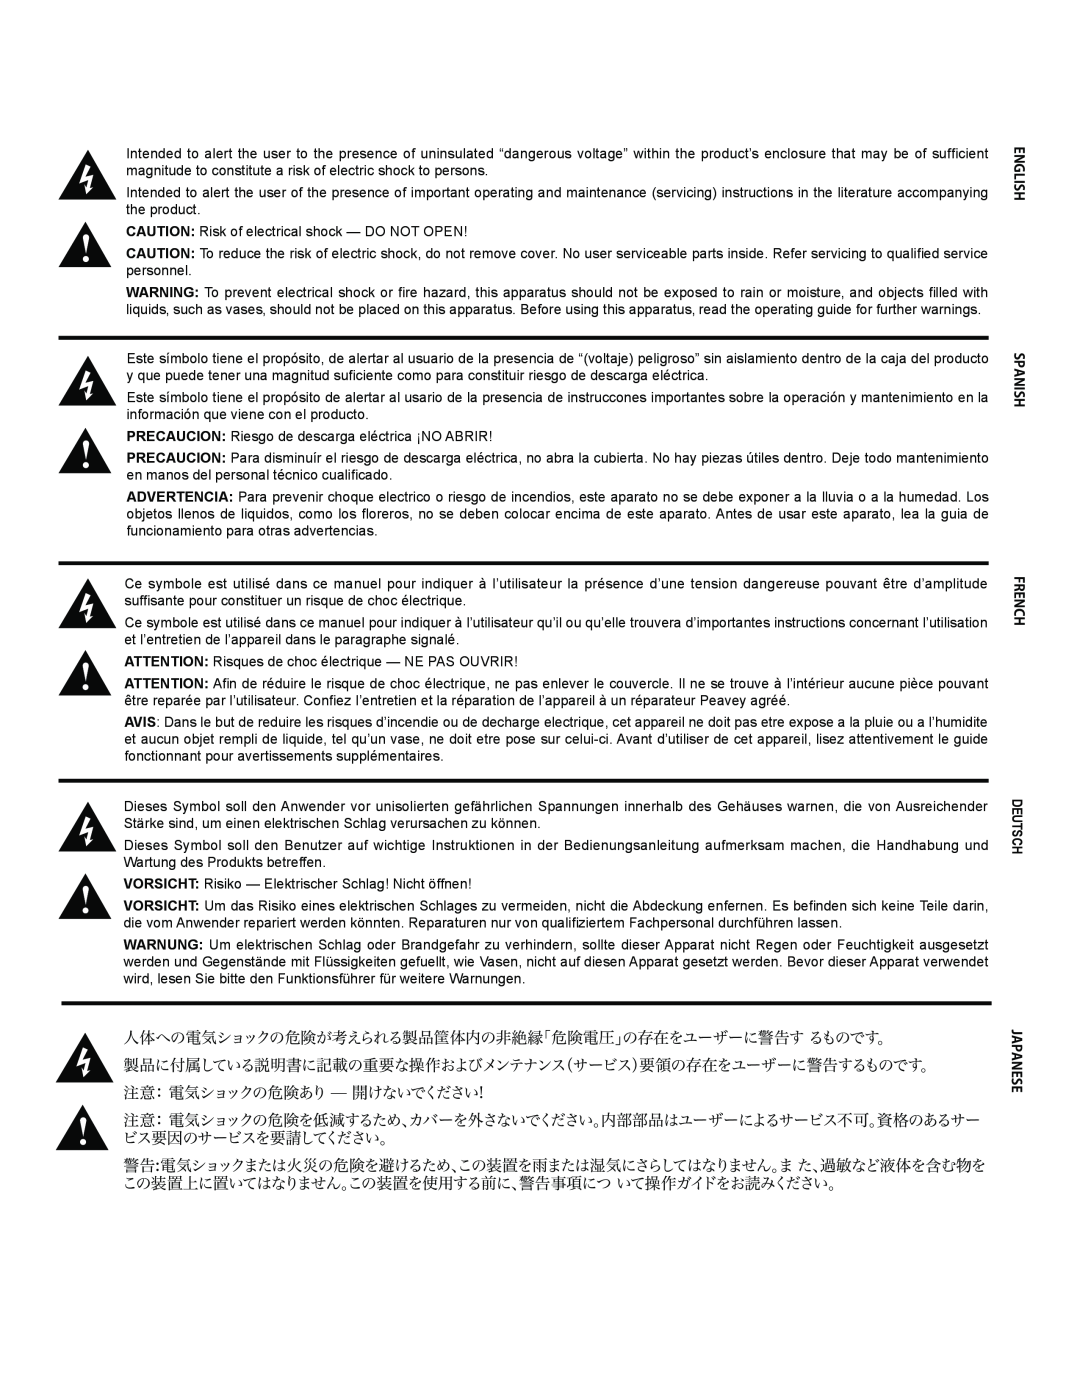 Peavey 35XO manual CAUTION Risk of electrical shock - DO NOT OPEN, Deutsch 